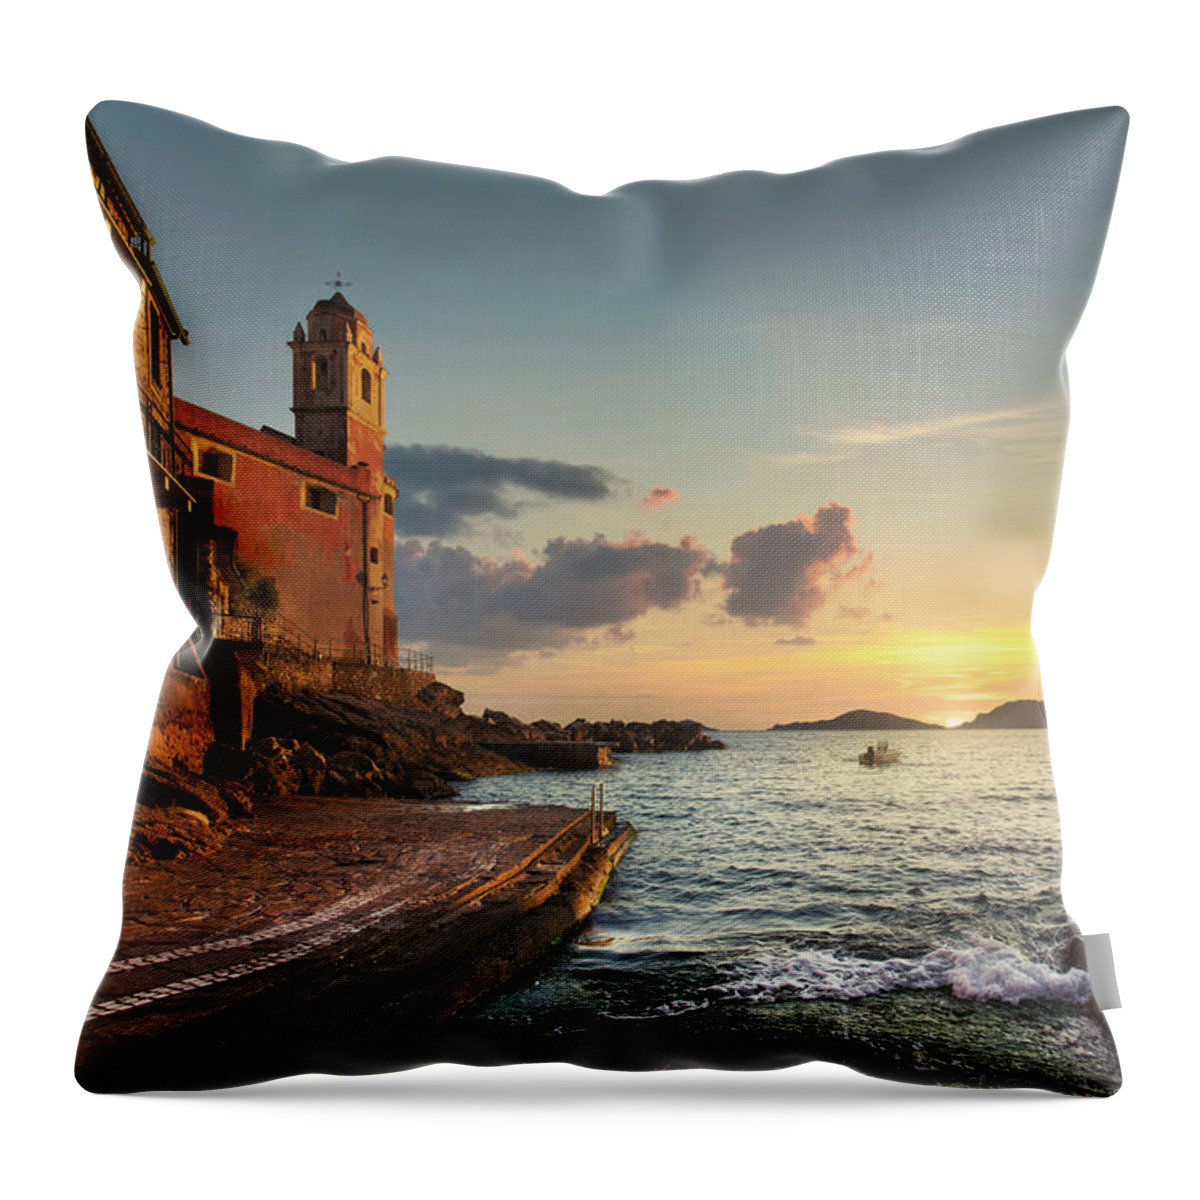 Tellaro Throw Pillow featuring the photograph Tellaro Church and Sea. Liguria by Stefano Orazzini